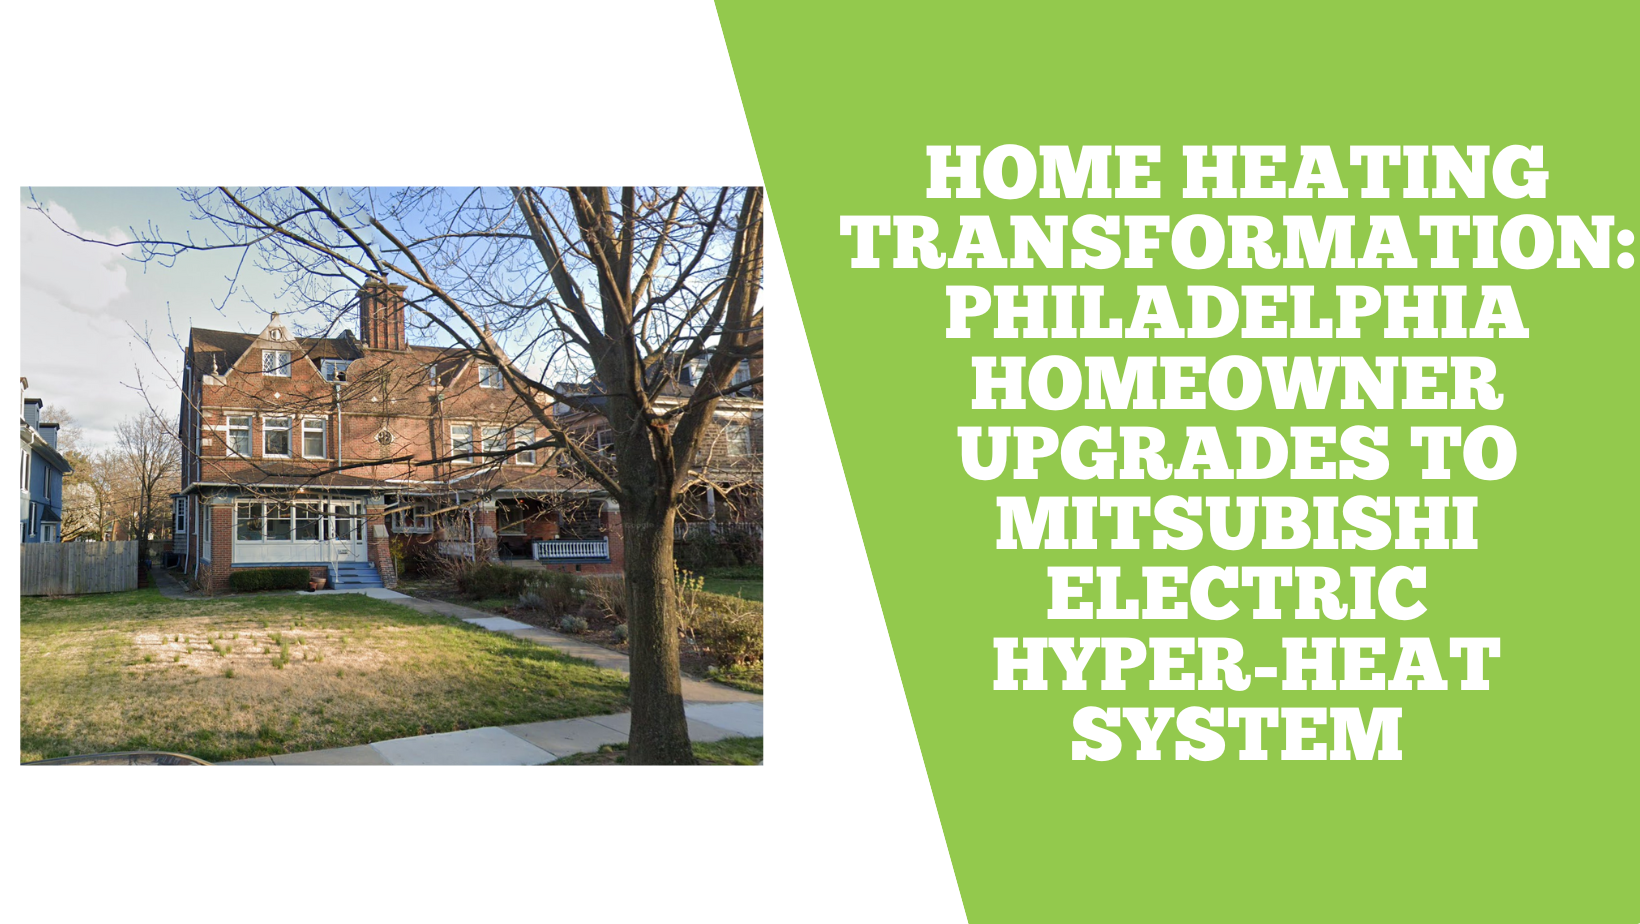 Home Heating Transformation: Philadelphia Homeowner Upgrades to Mitsubishi Electric Hyper-Heat System